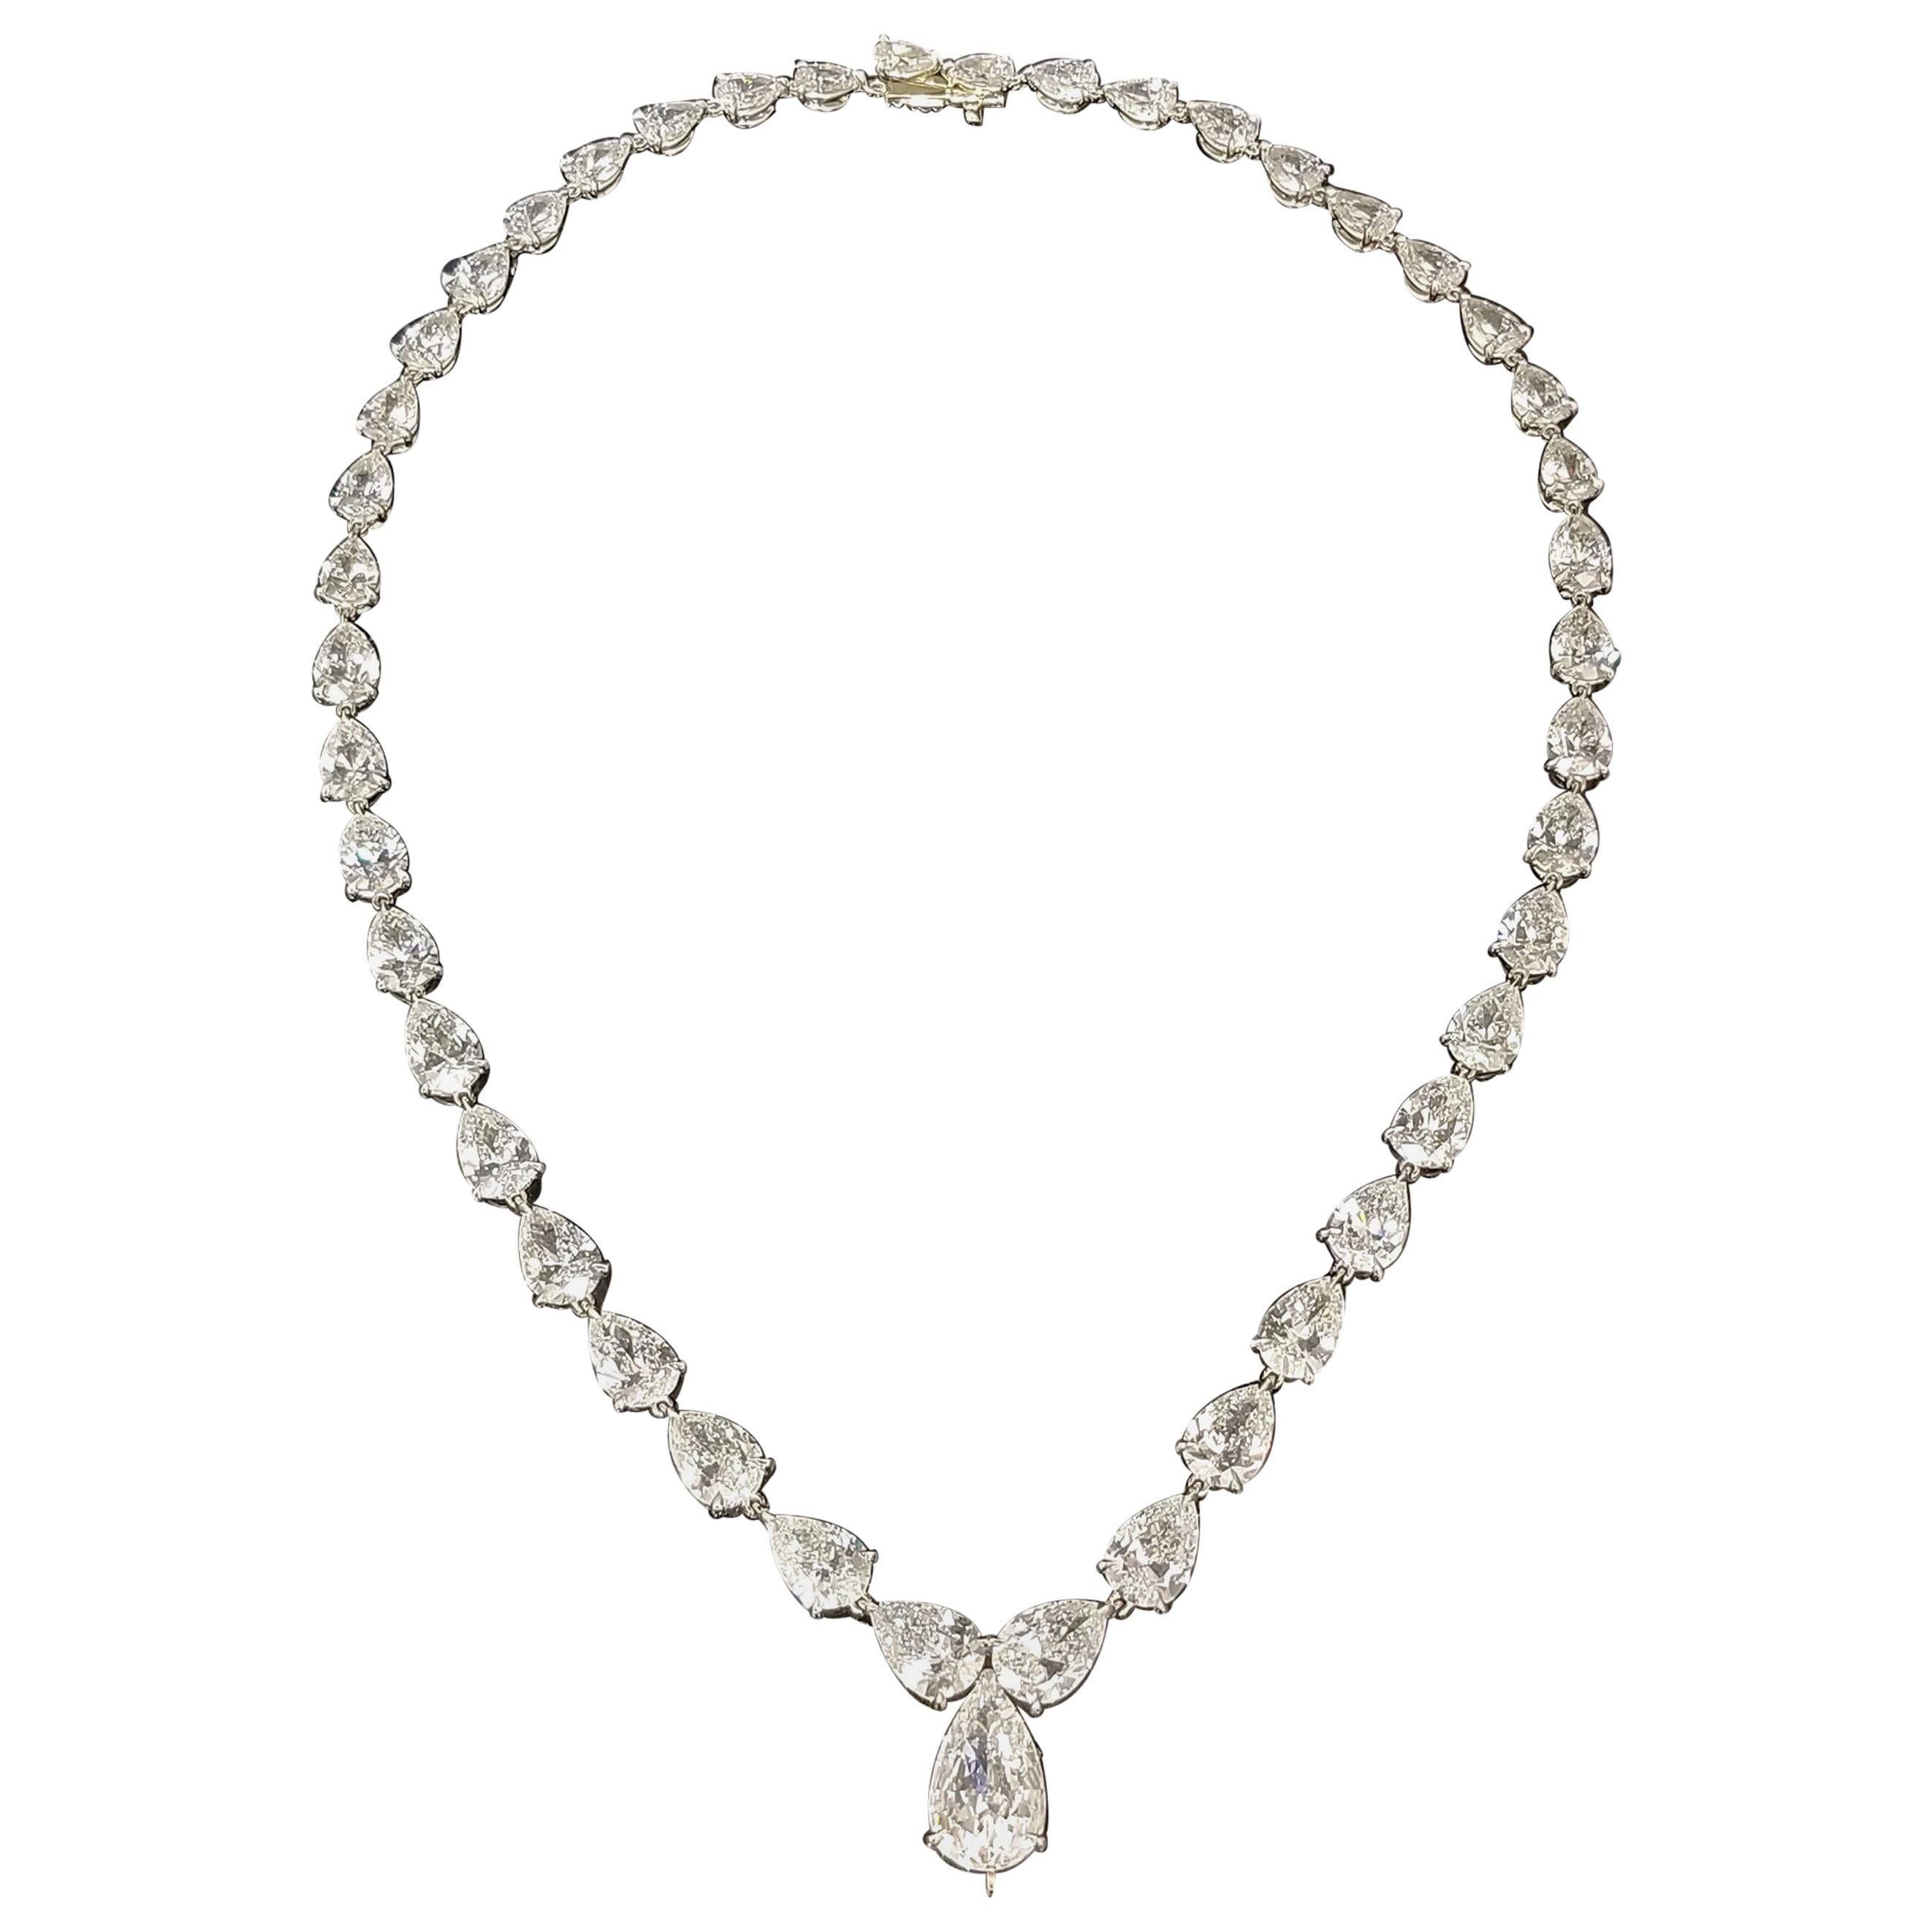 Scarselli 31 Carat Pear Cut Diamond Tennis Necklace in Platinum GIA  Certified